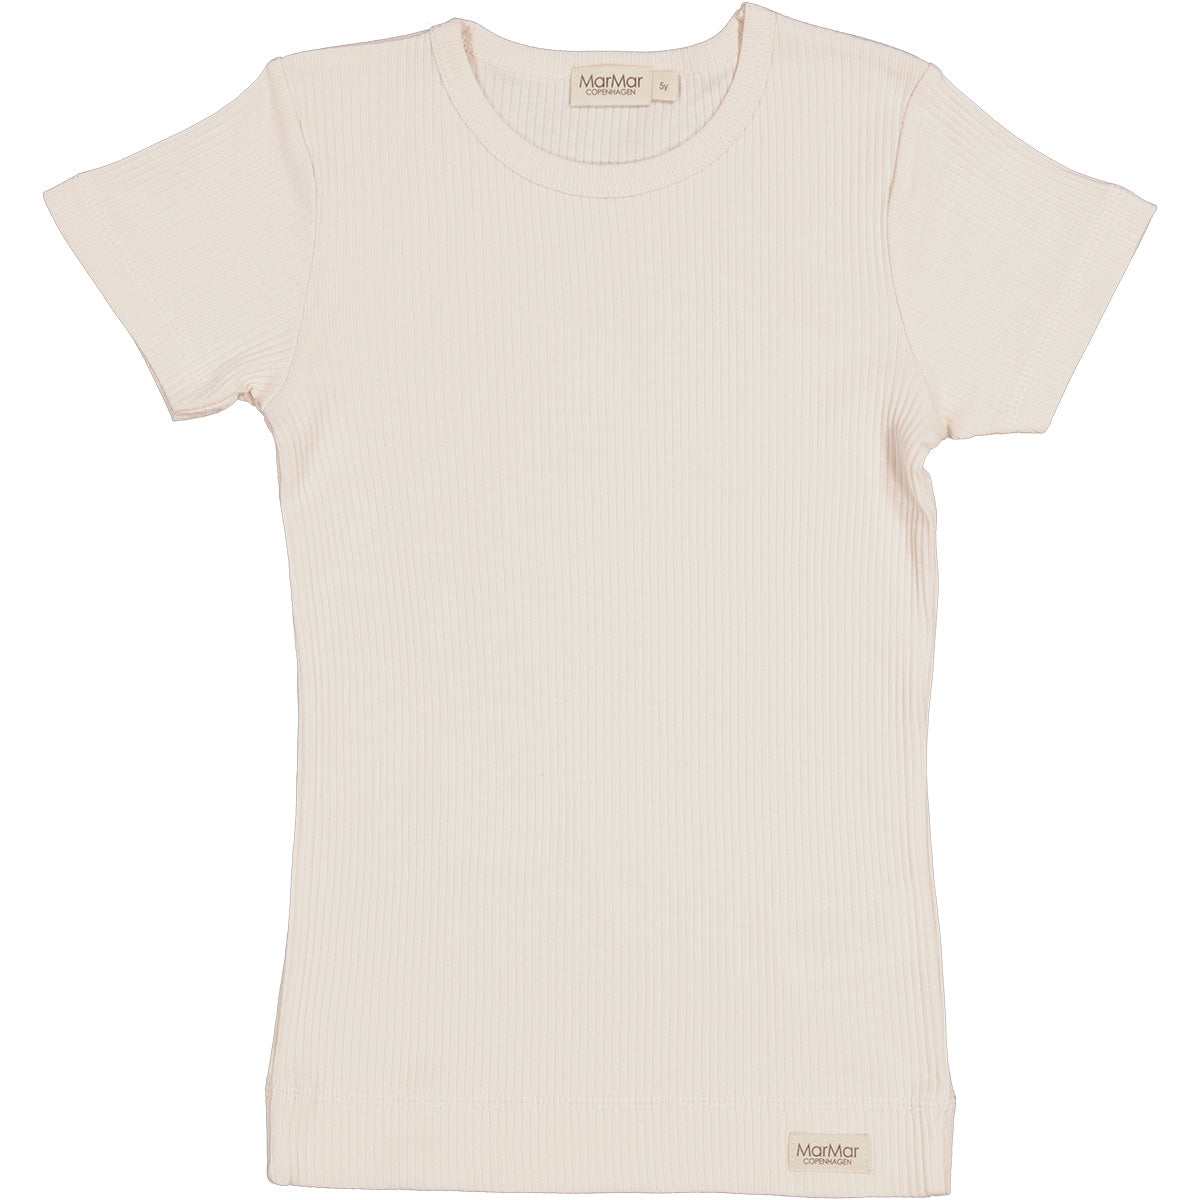 The Plain Tee from MarMar Copenhagen. Plain short-sleeved t-shirt. Rib knitted. Soft, stretchy